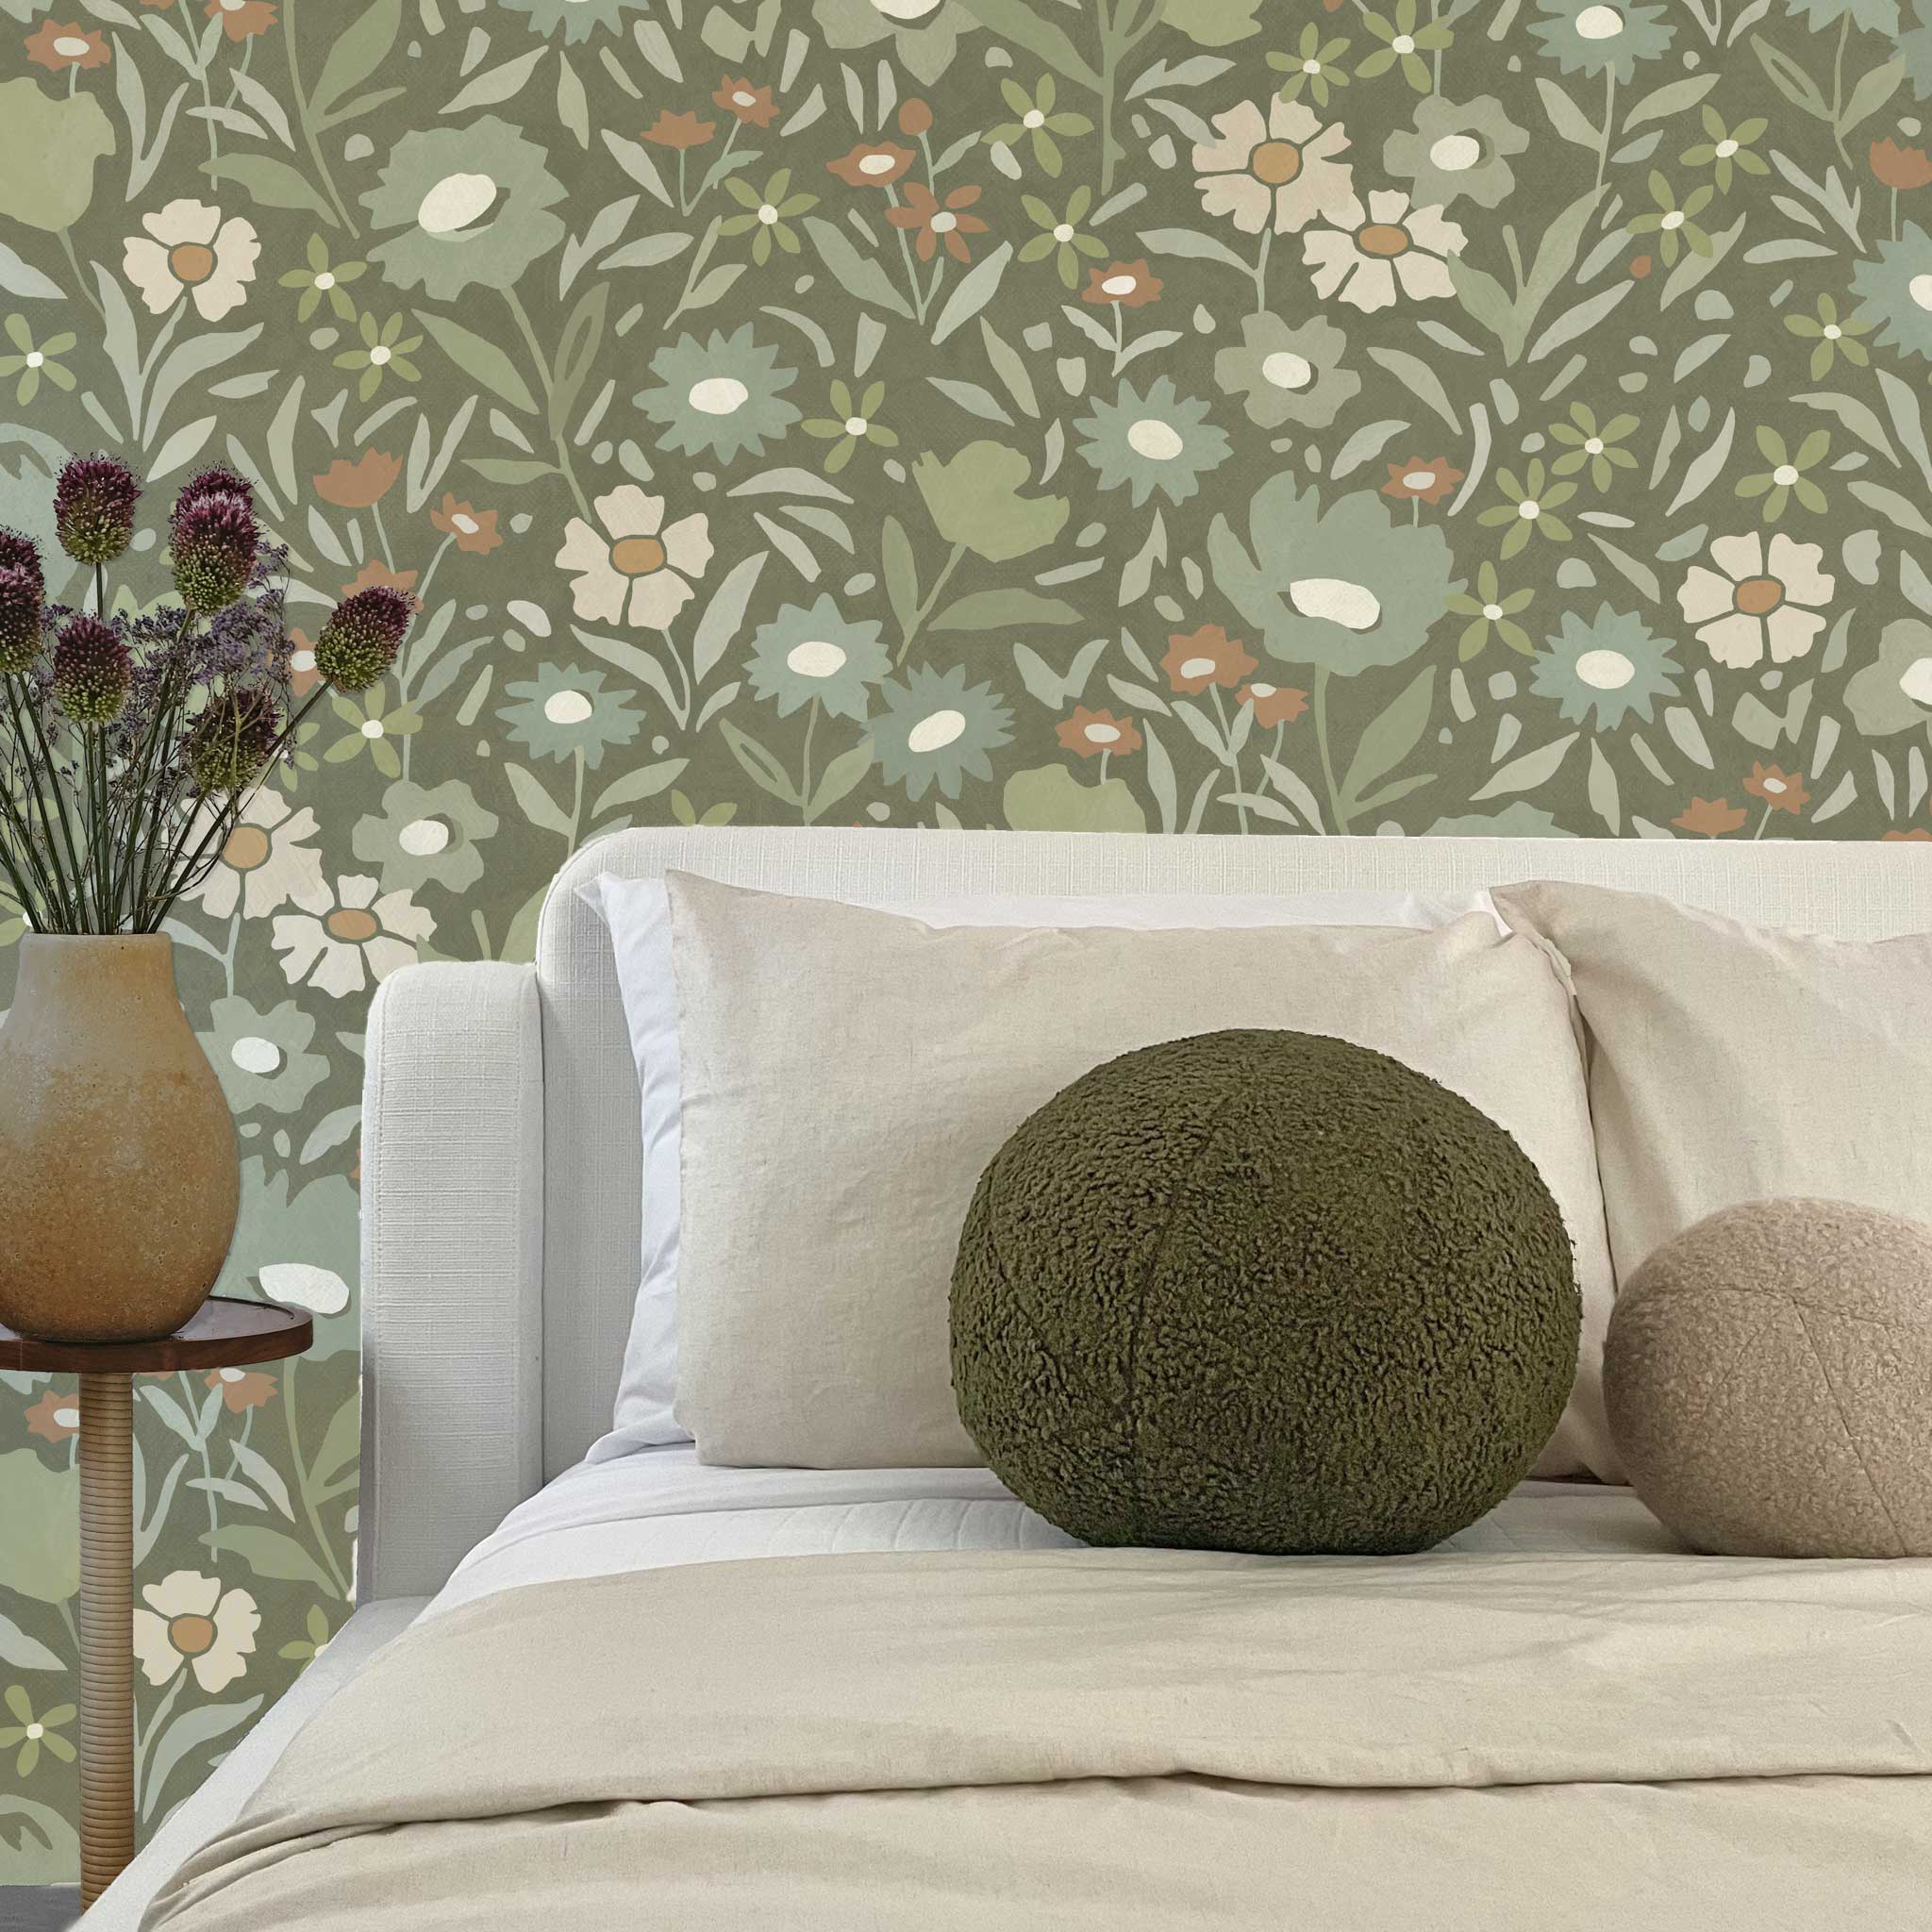 Habita wallpaper design - green Maude floral pattern in bedroom